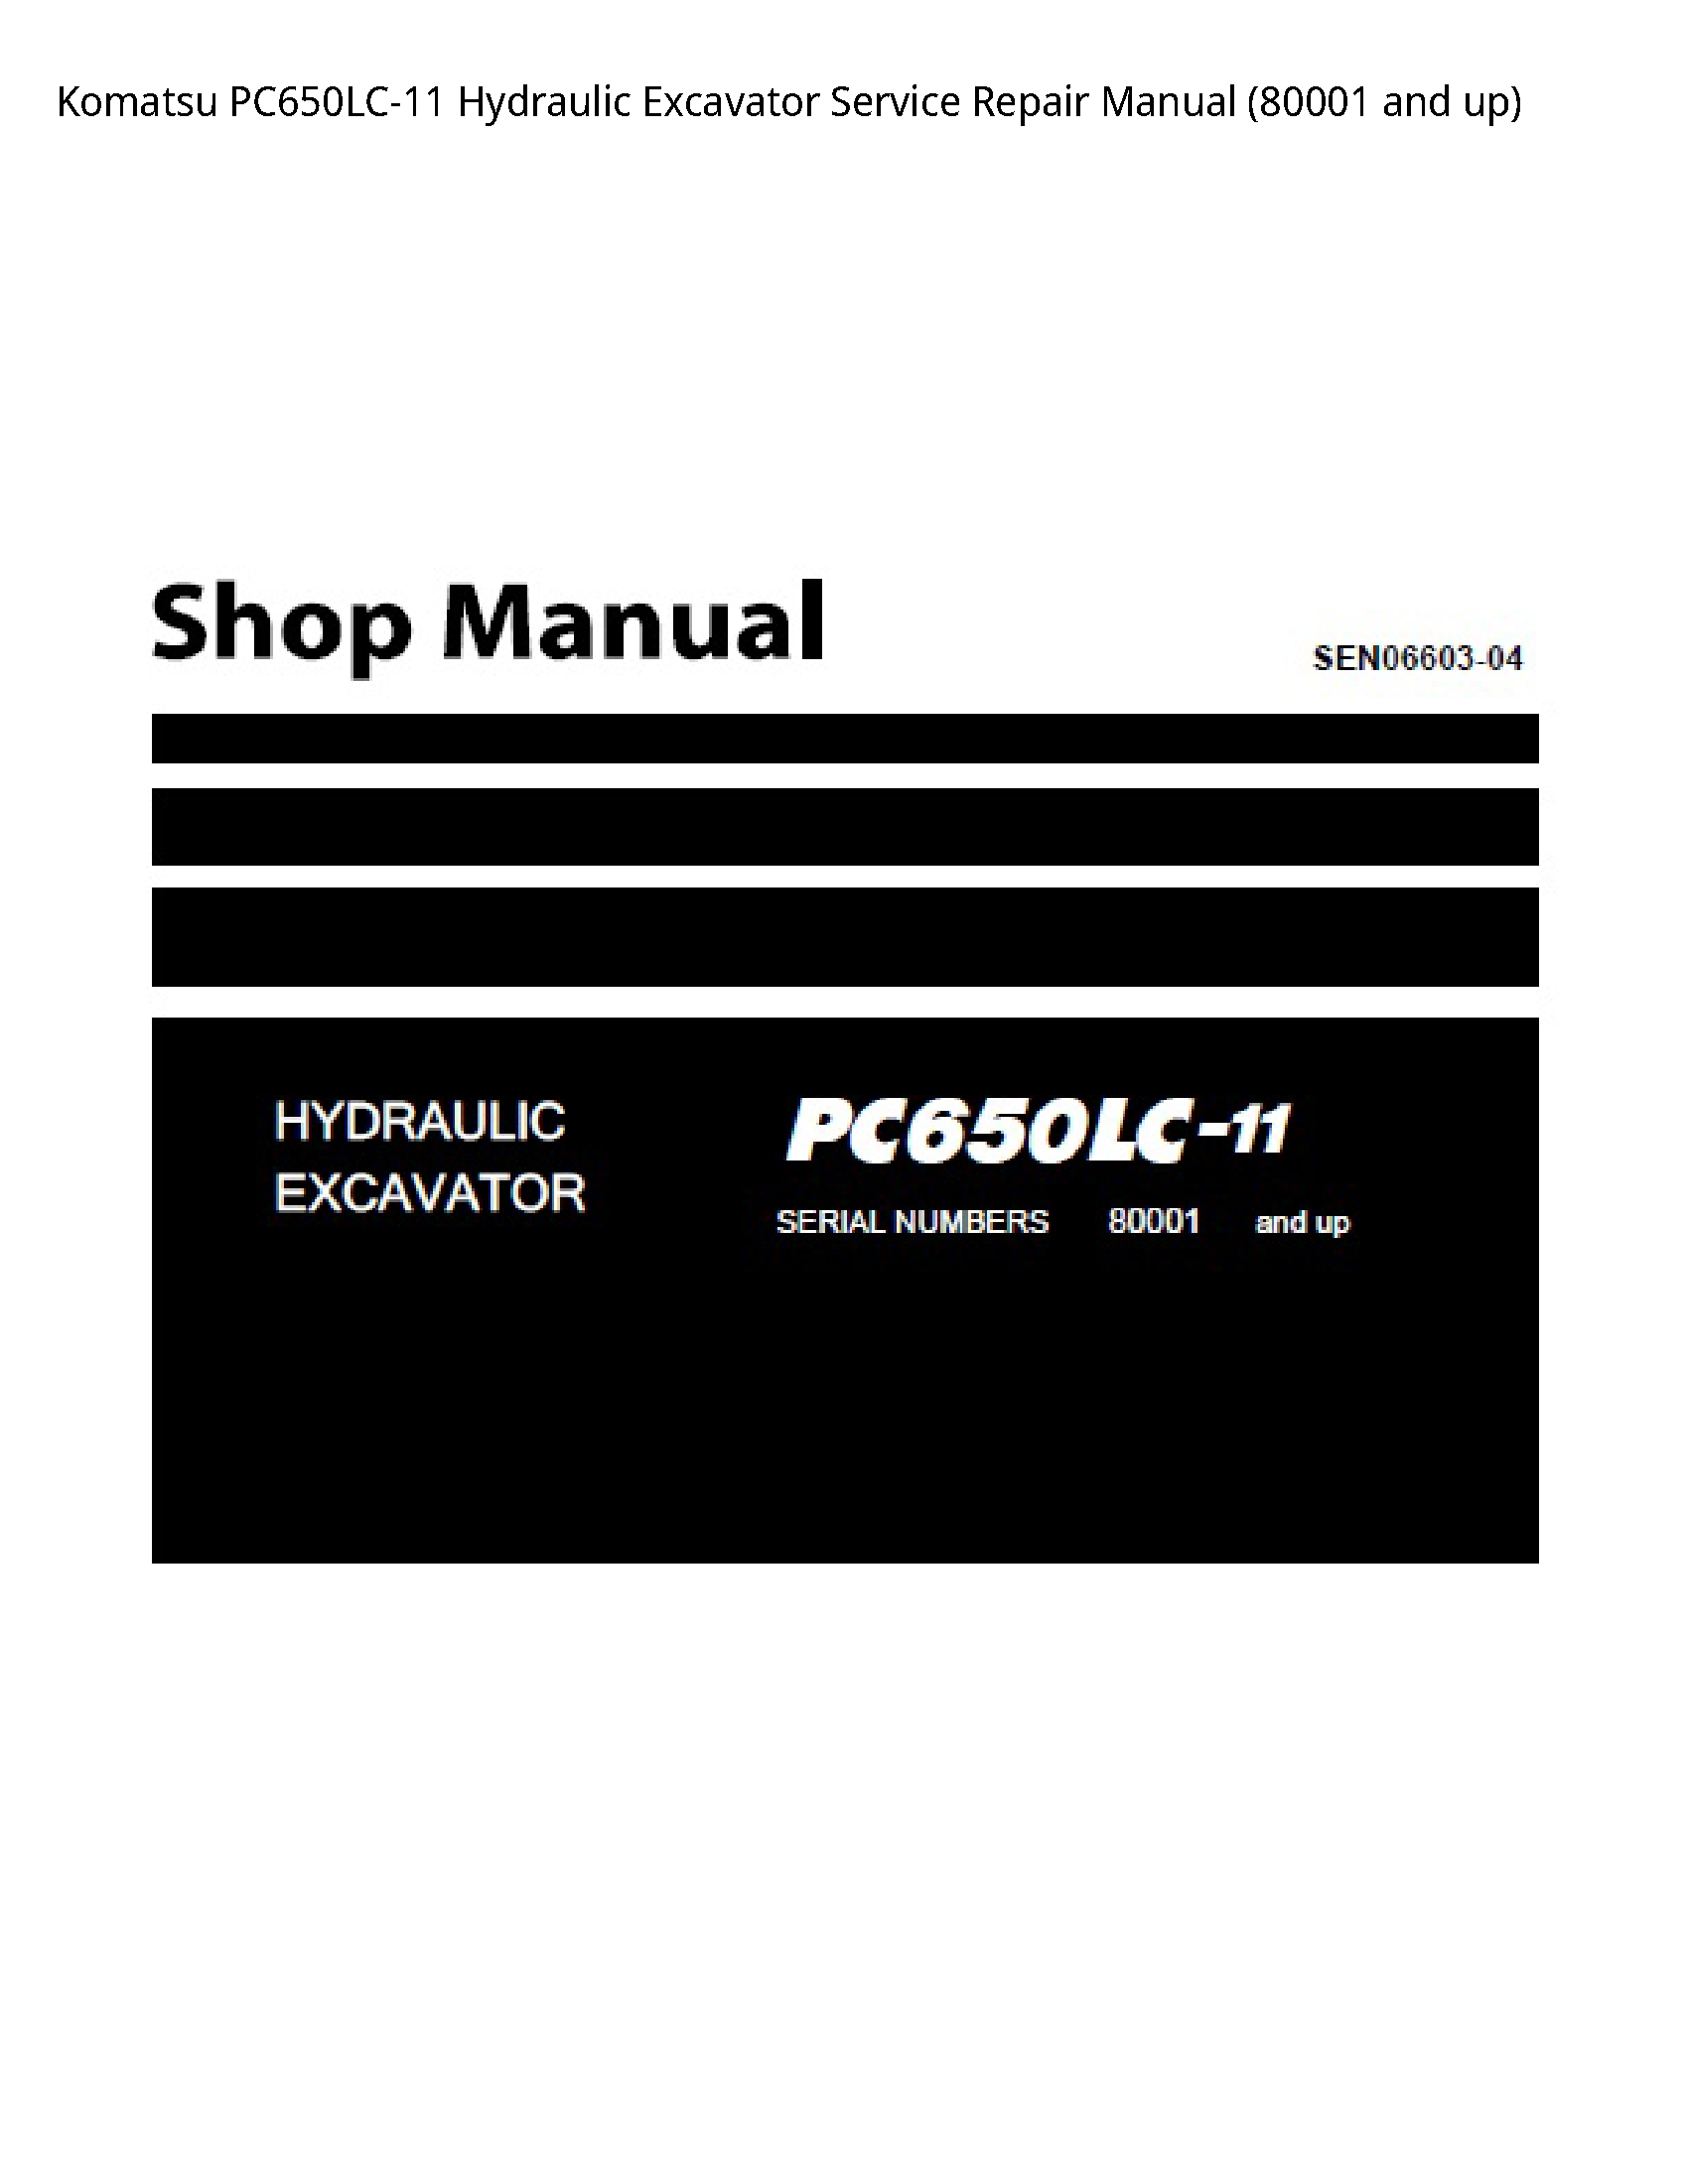 KOMATSU PC650LC-11 Hydraulic Excavator manual